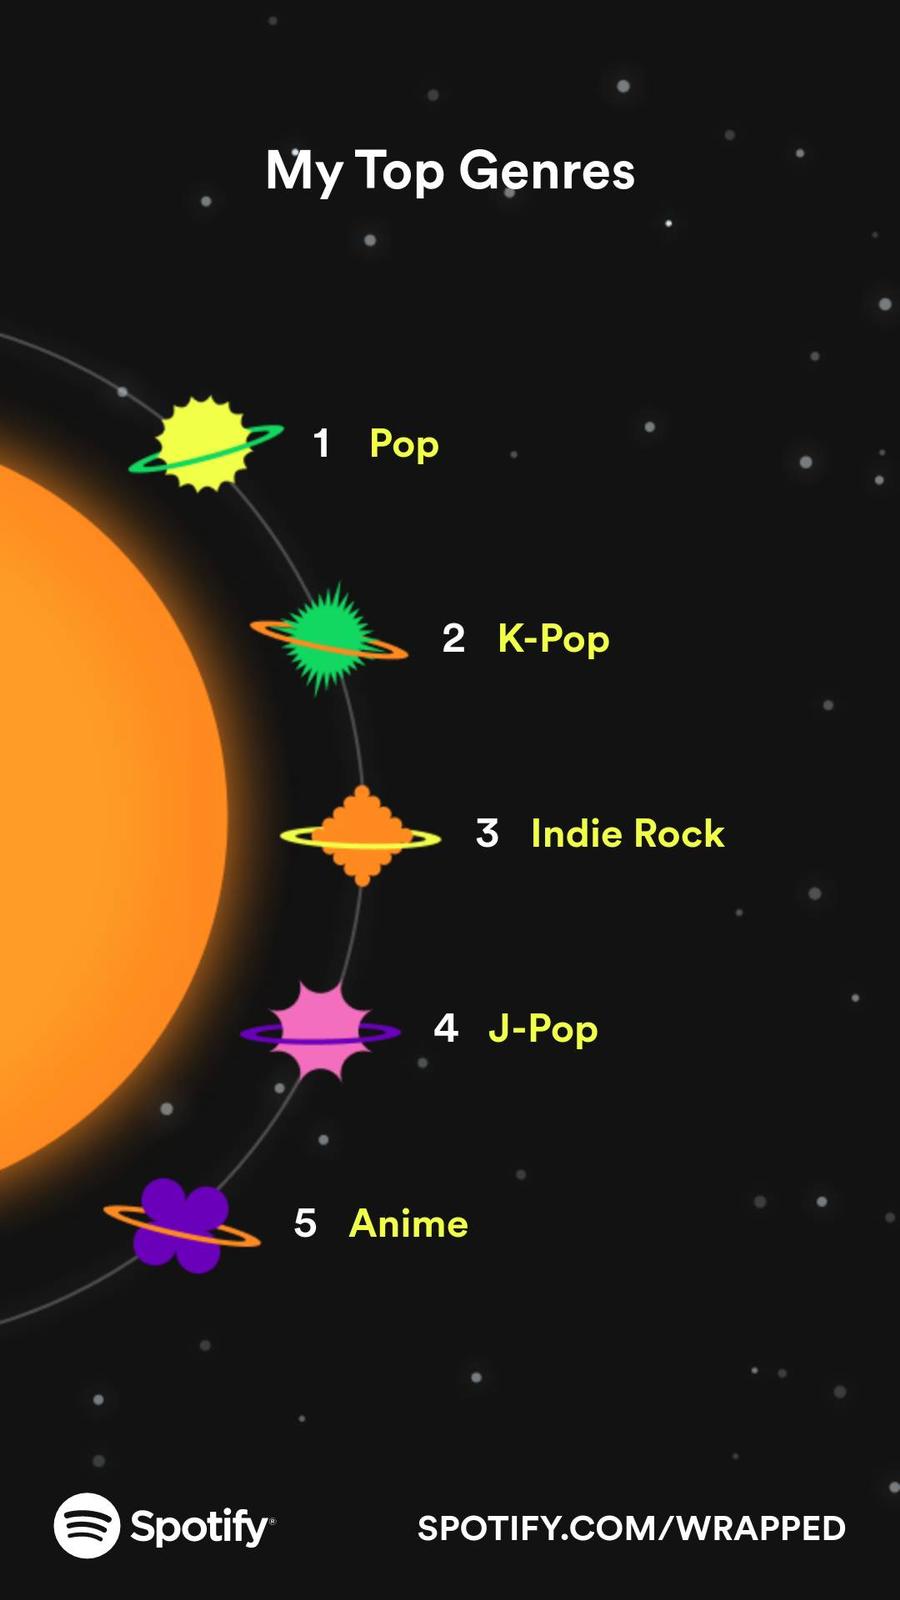 Top genres: Pop, k-pop, indie rock, j-pop, and anime.